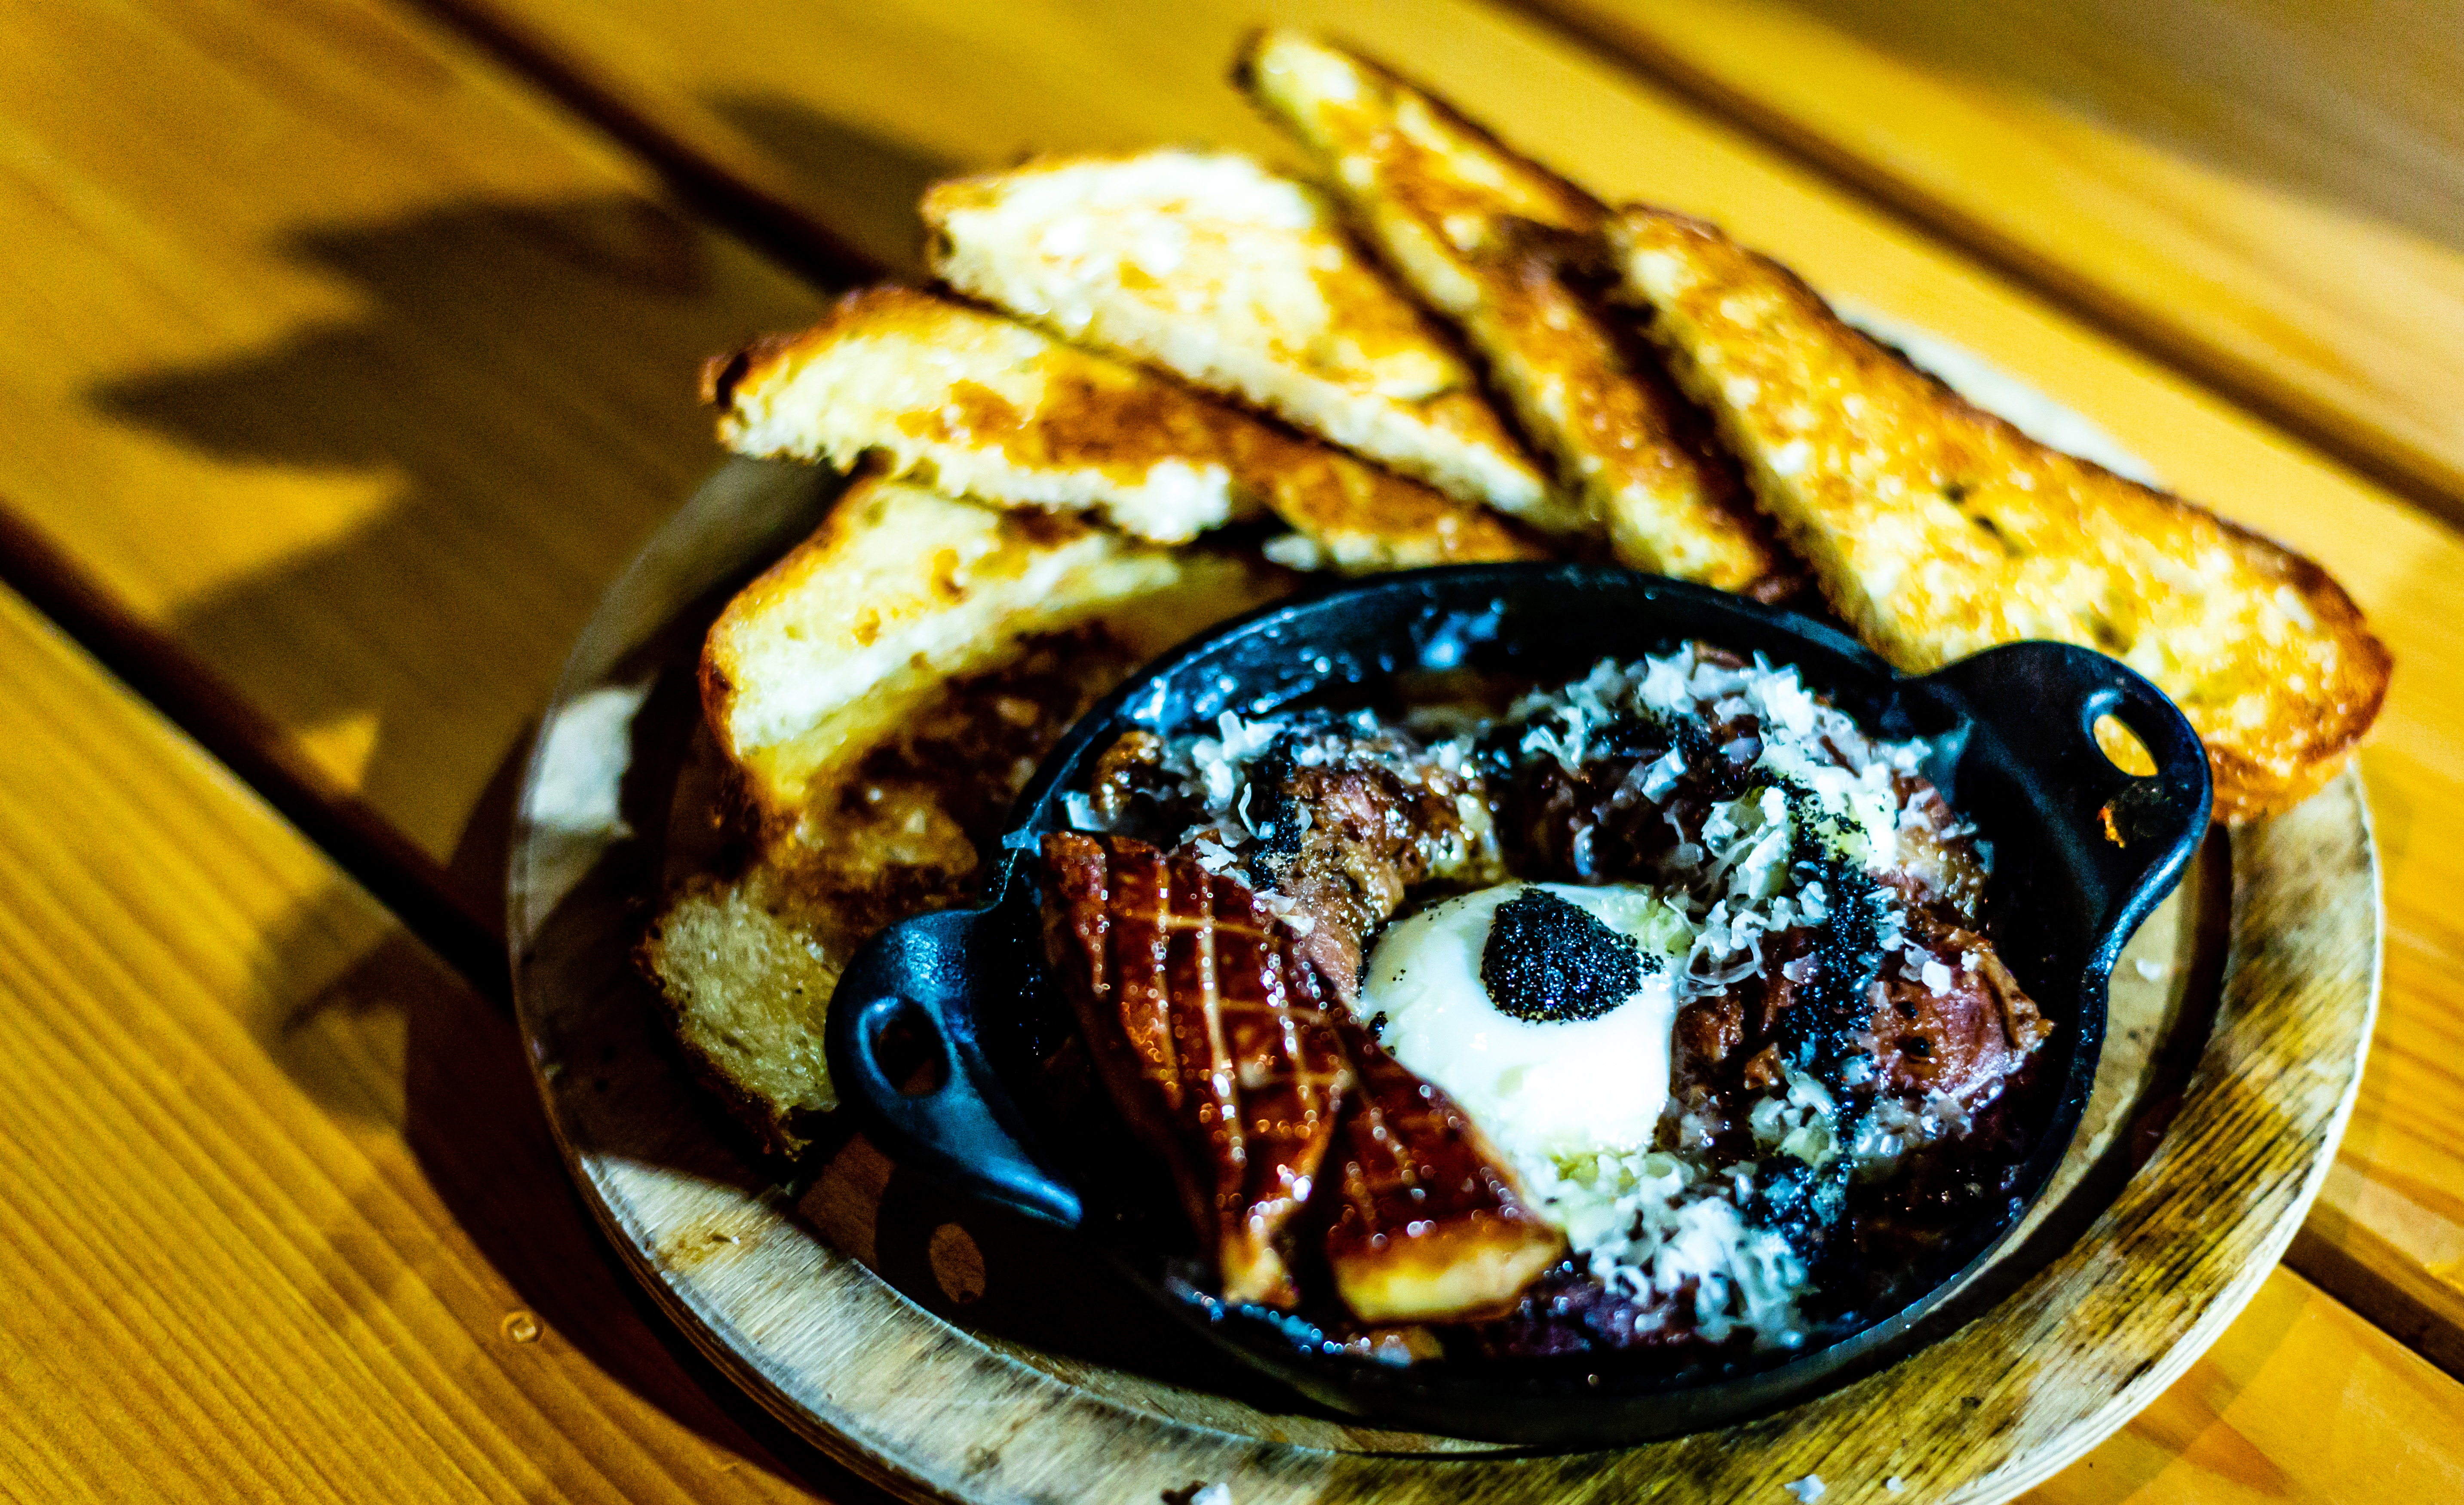 Best Atlanta dishes Huevo con trufa at the Iberian Pig Buckhead photo image